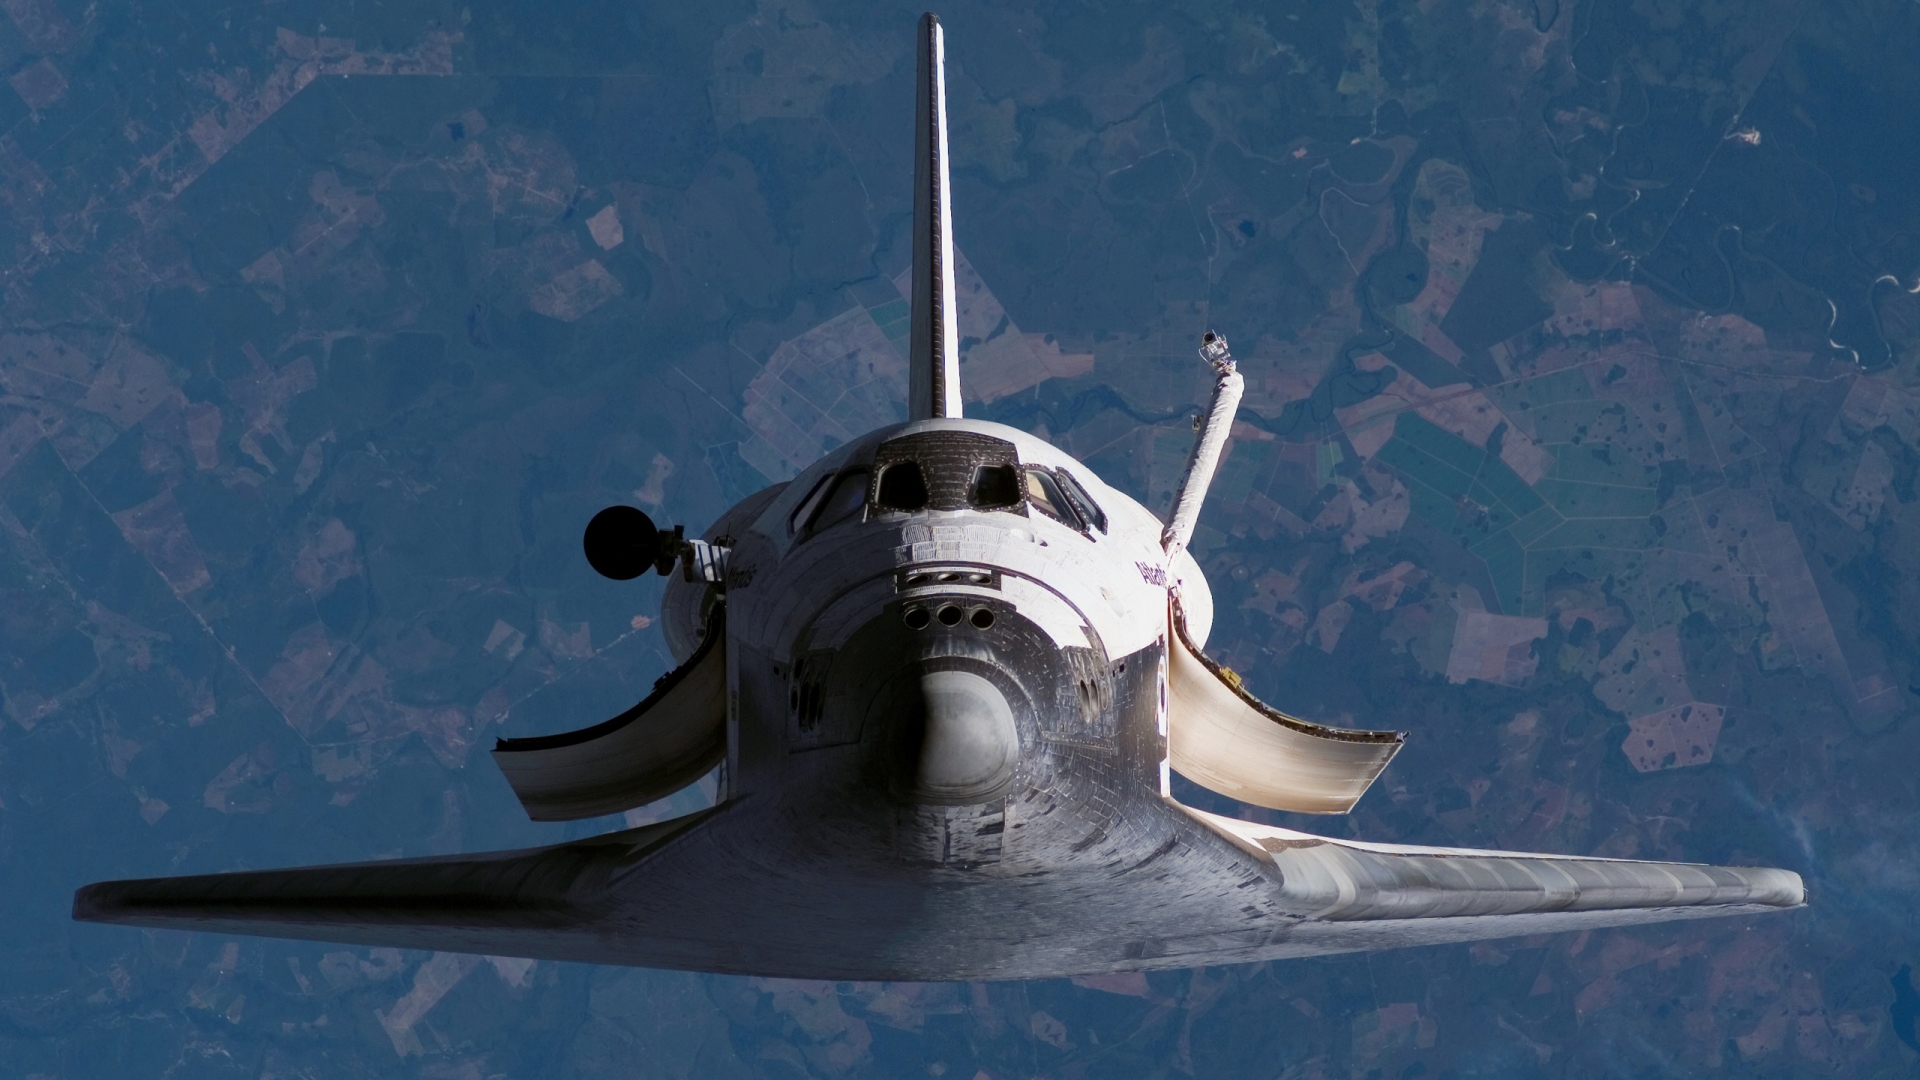 space shuttle atlantis, vehicles, space shuttles